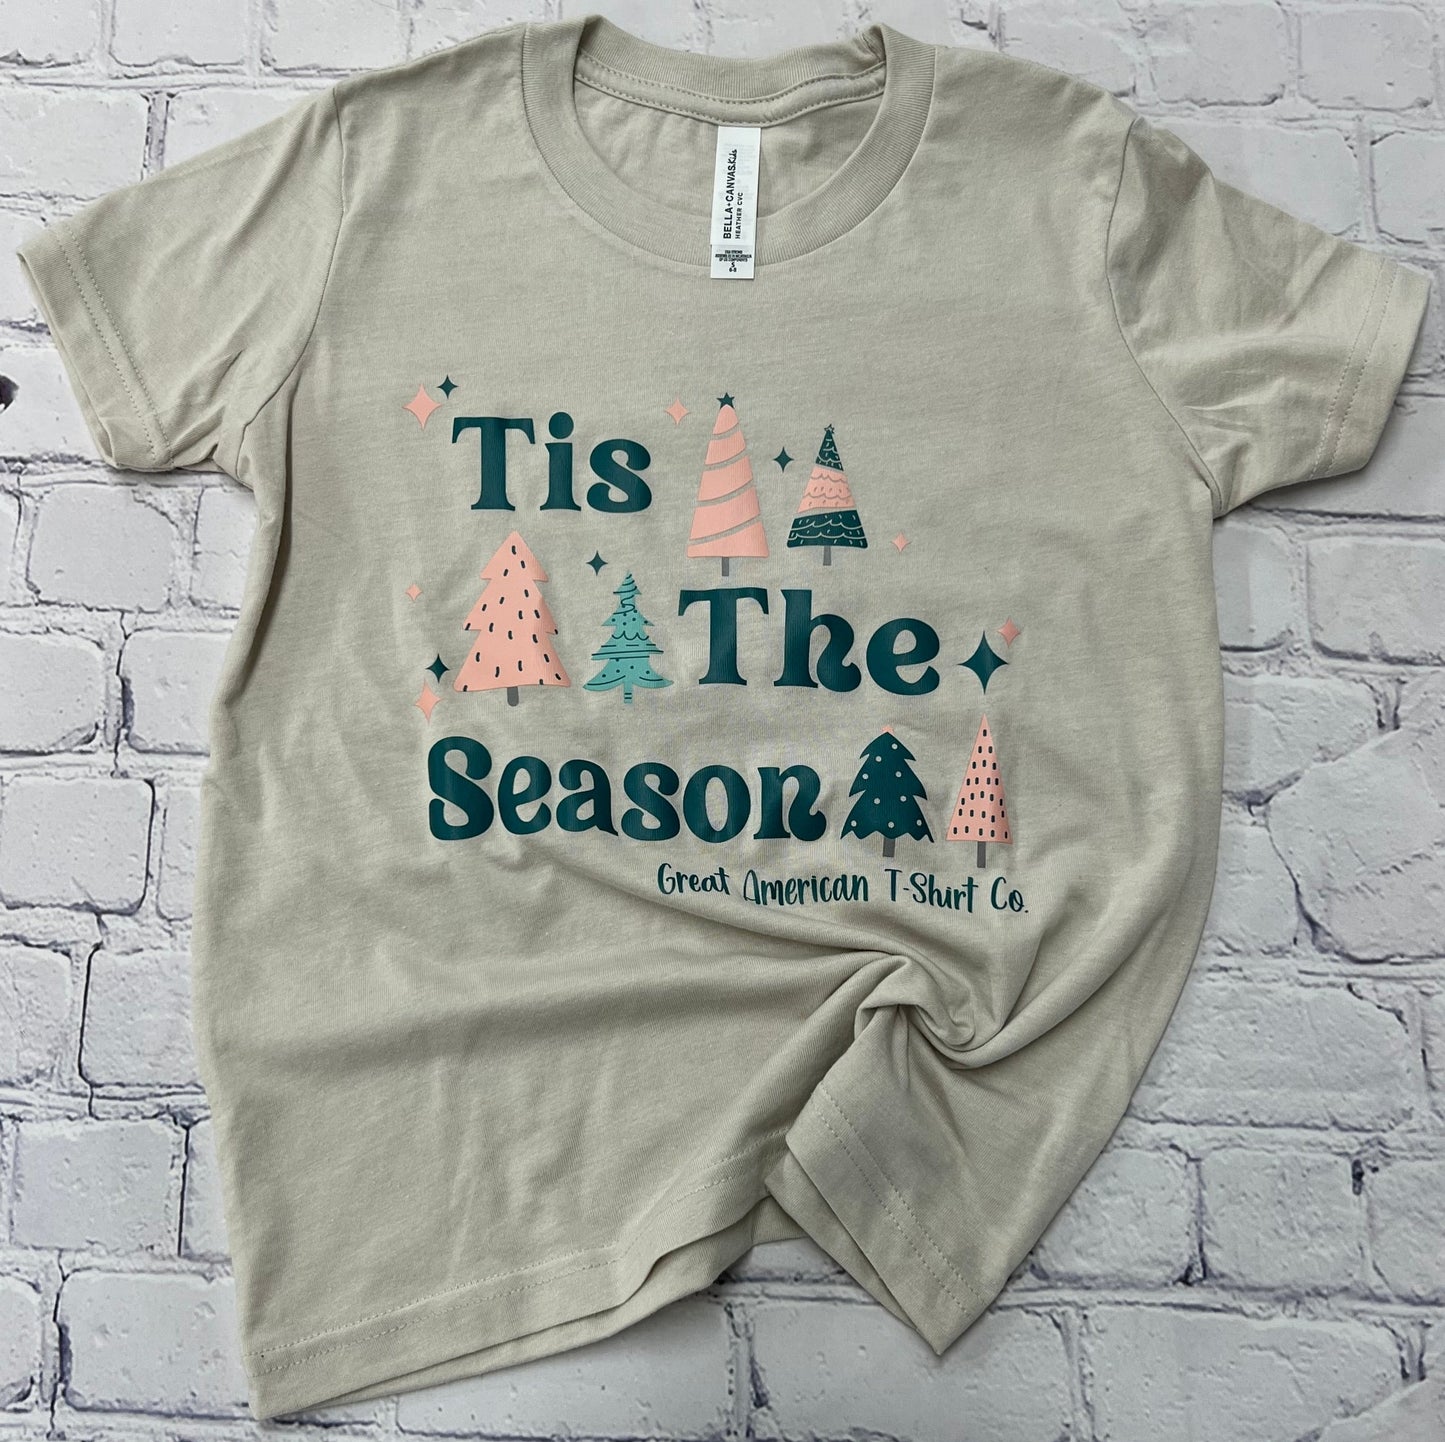 Youth Tis The Season Graphic Tee